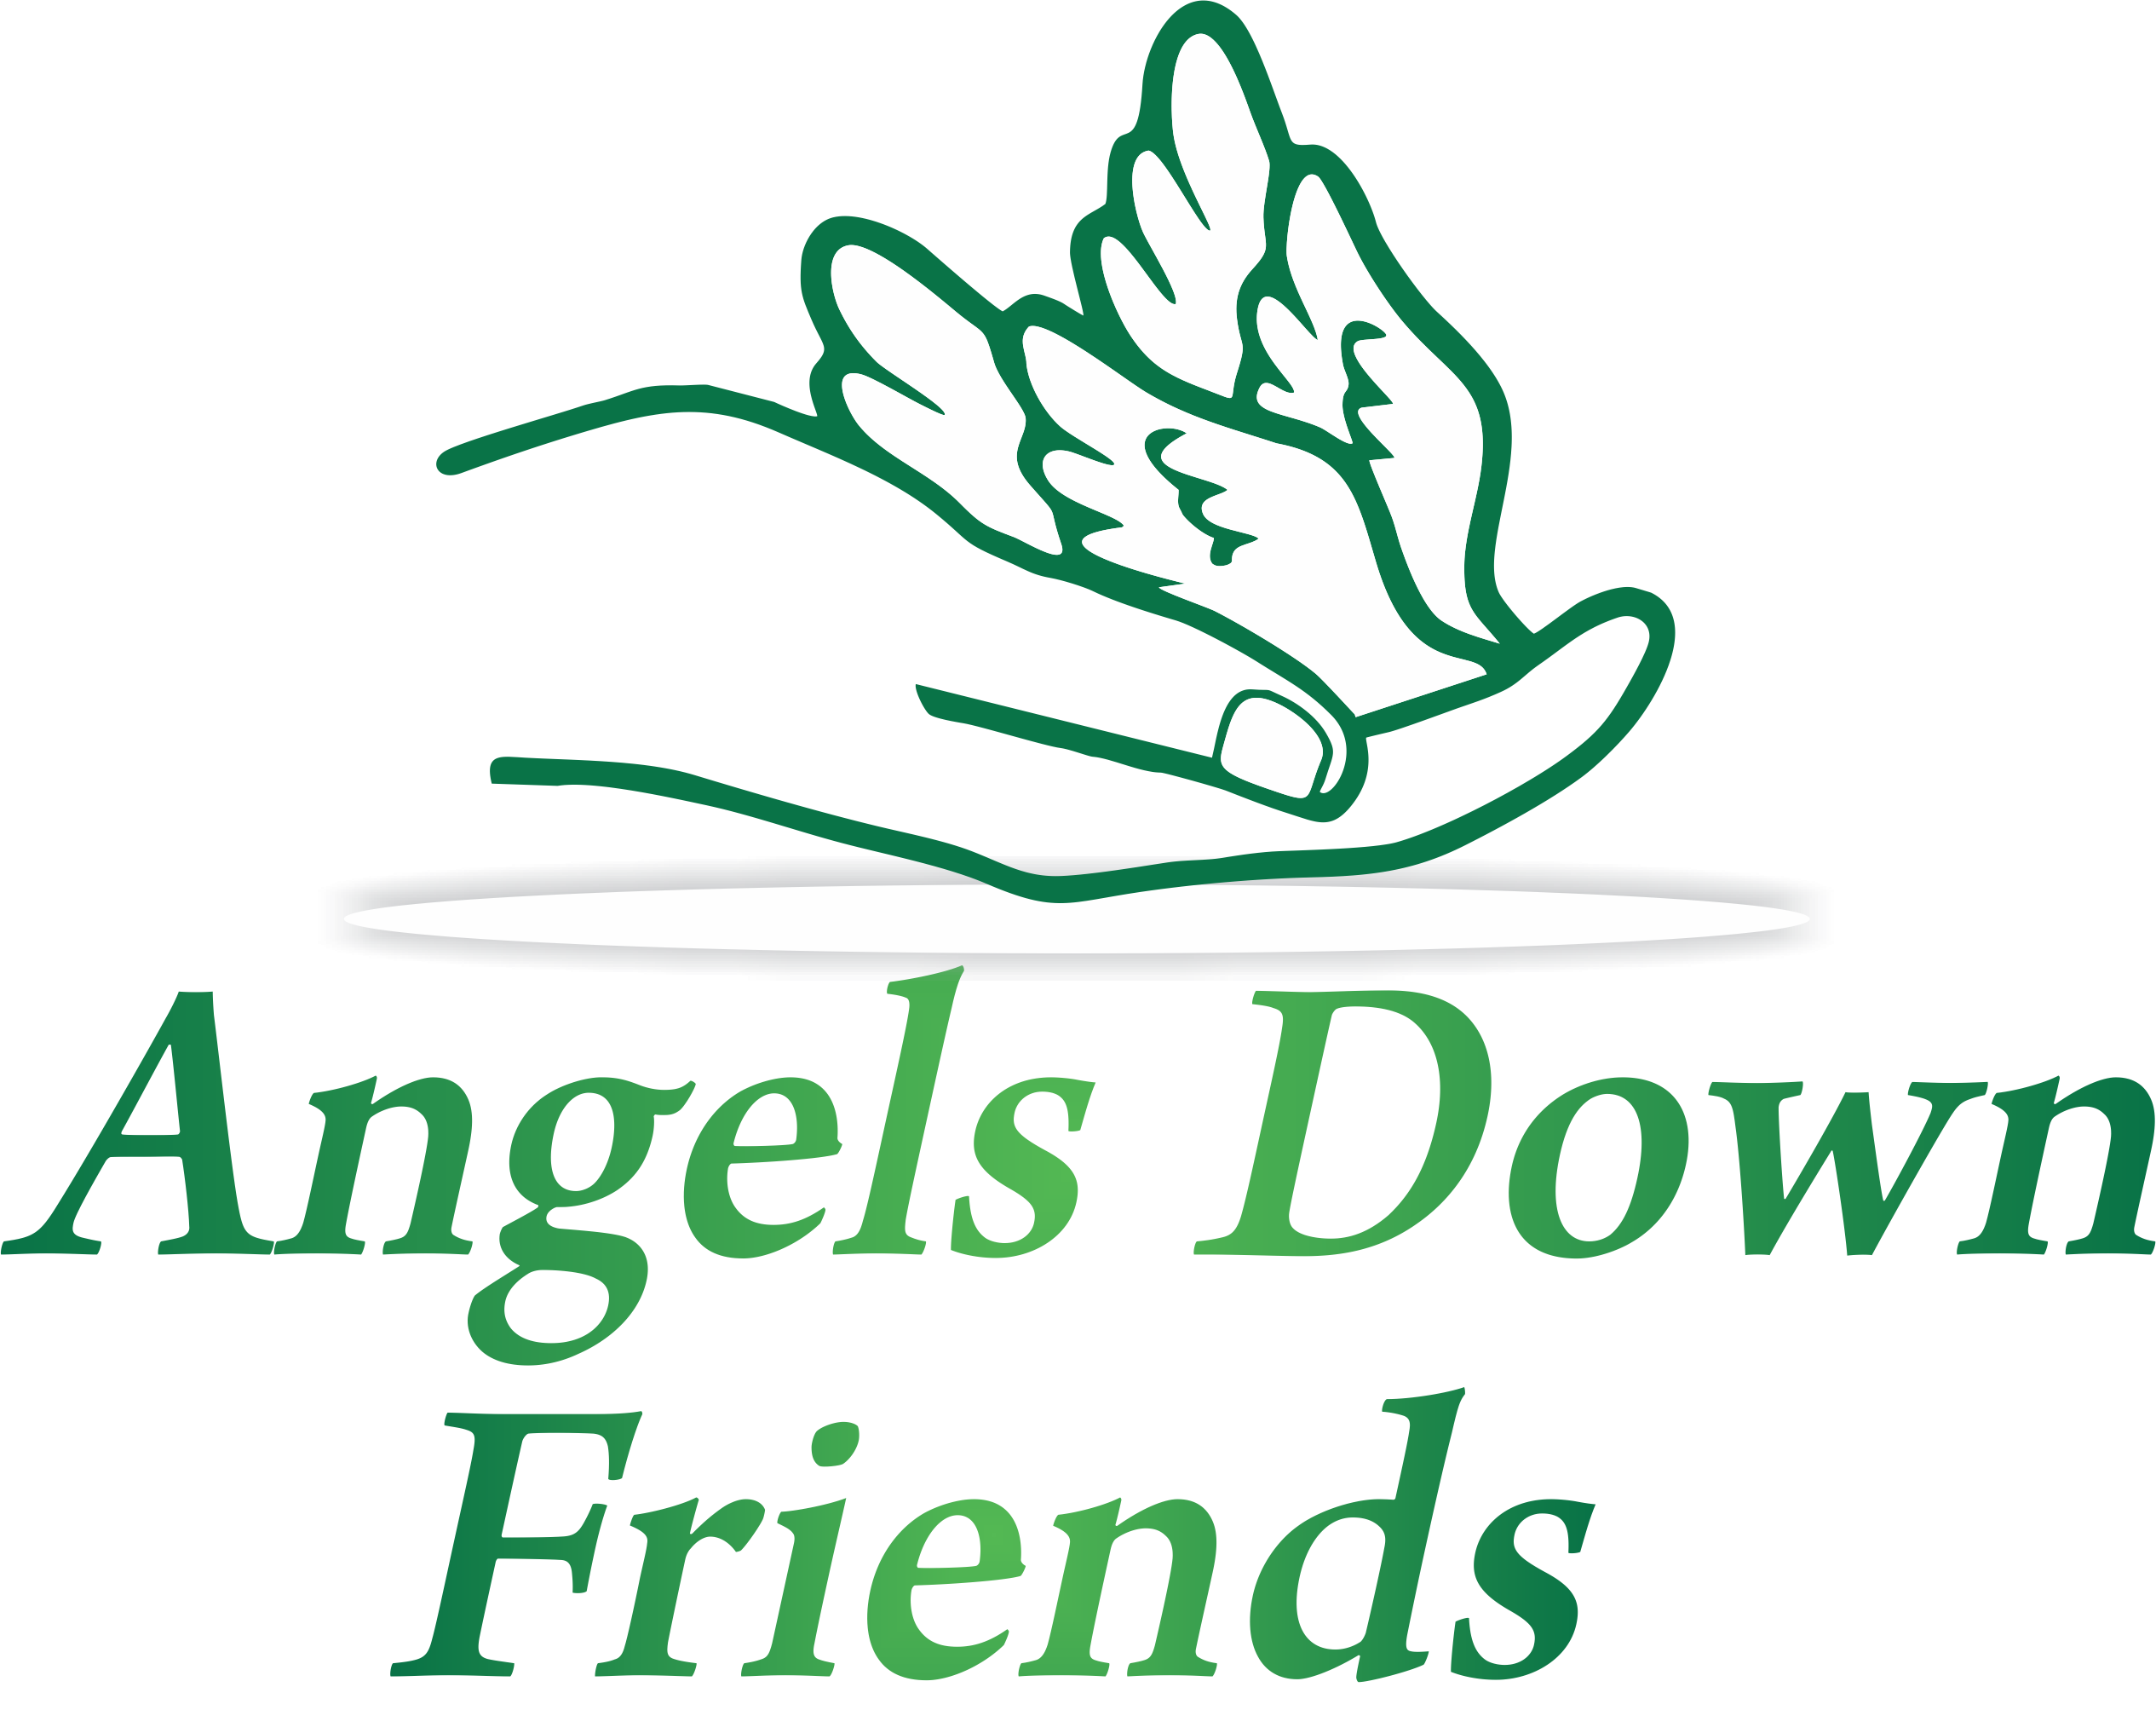 Angels Down Friends logo